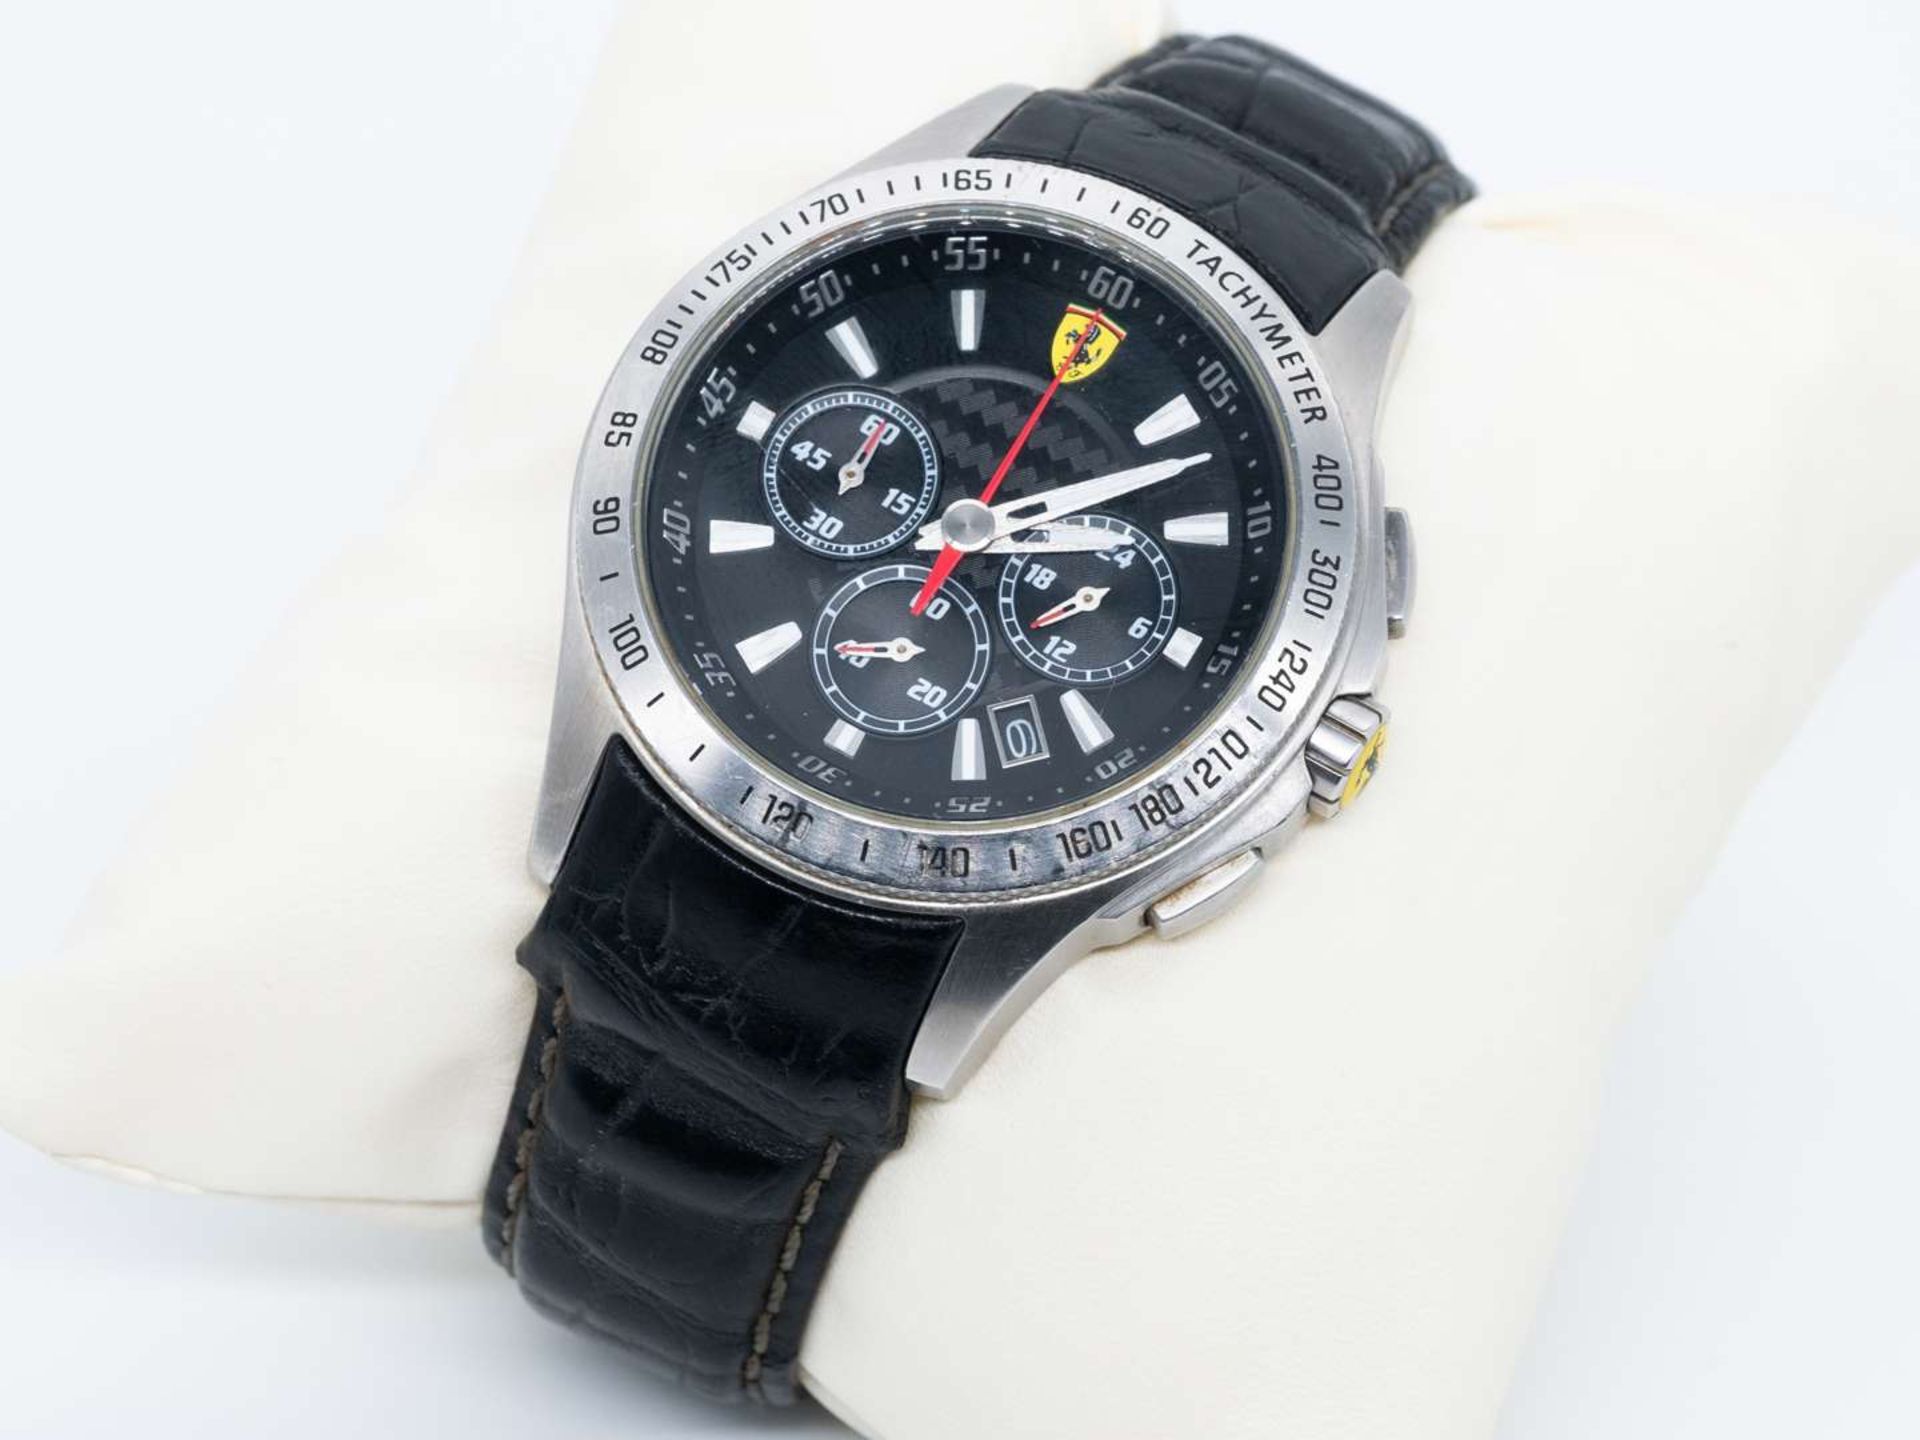 FERRARI, Scuderia, a quartz, stainless steel, two button chronograph wristwatch. - Image 2 of 4